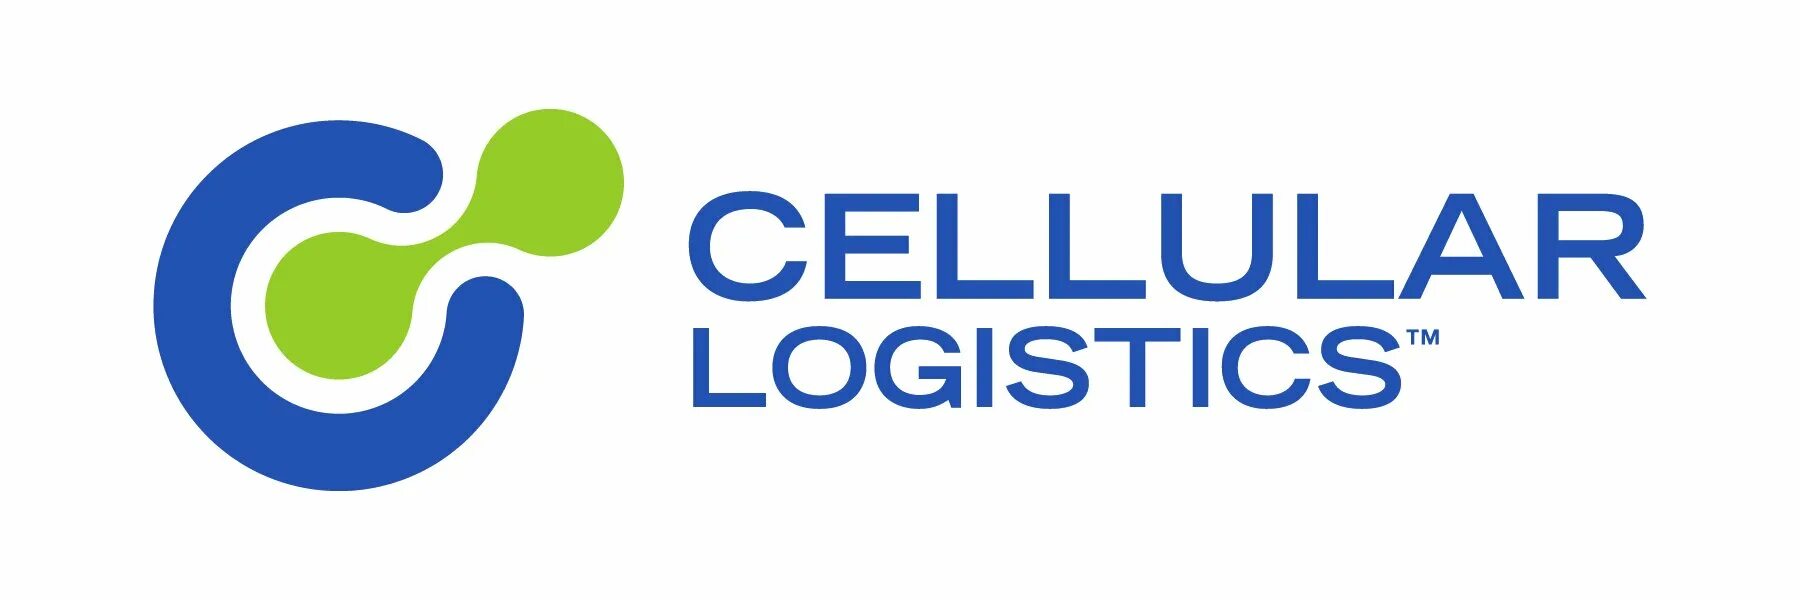 Cell logistic. Biolab logo. Cellular. National Logistics Cell. Asia Logistic печать.